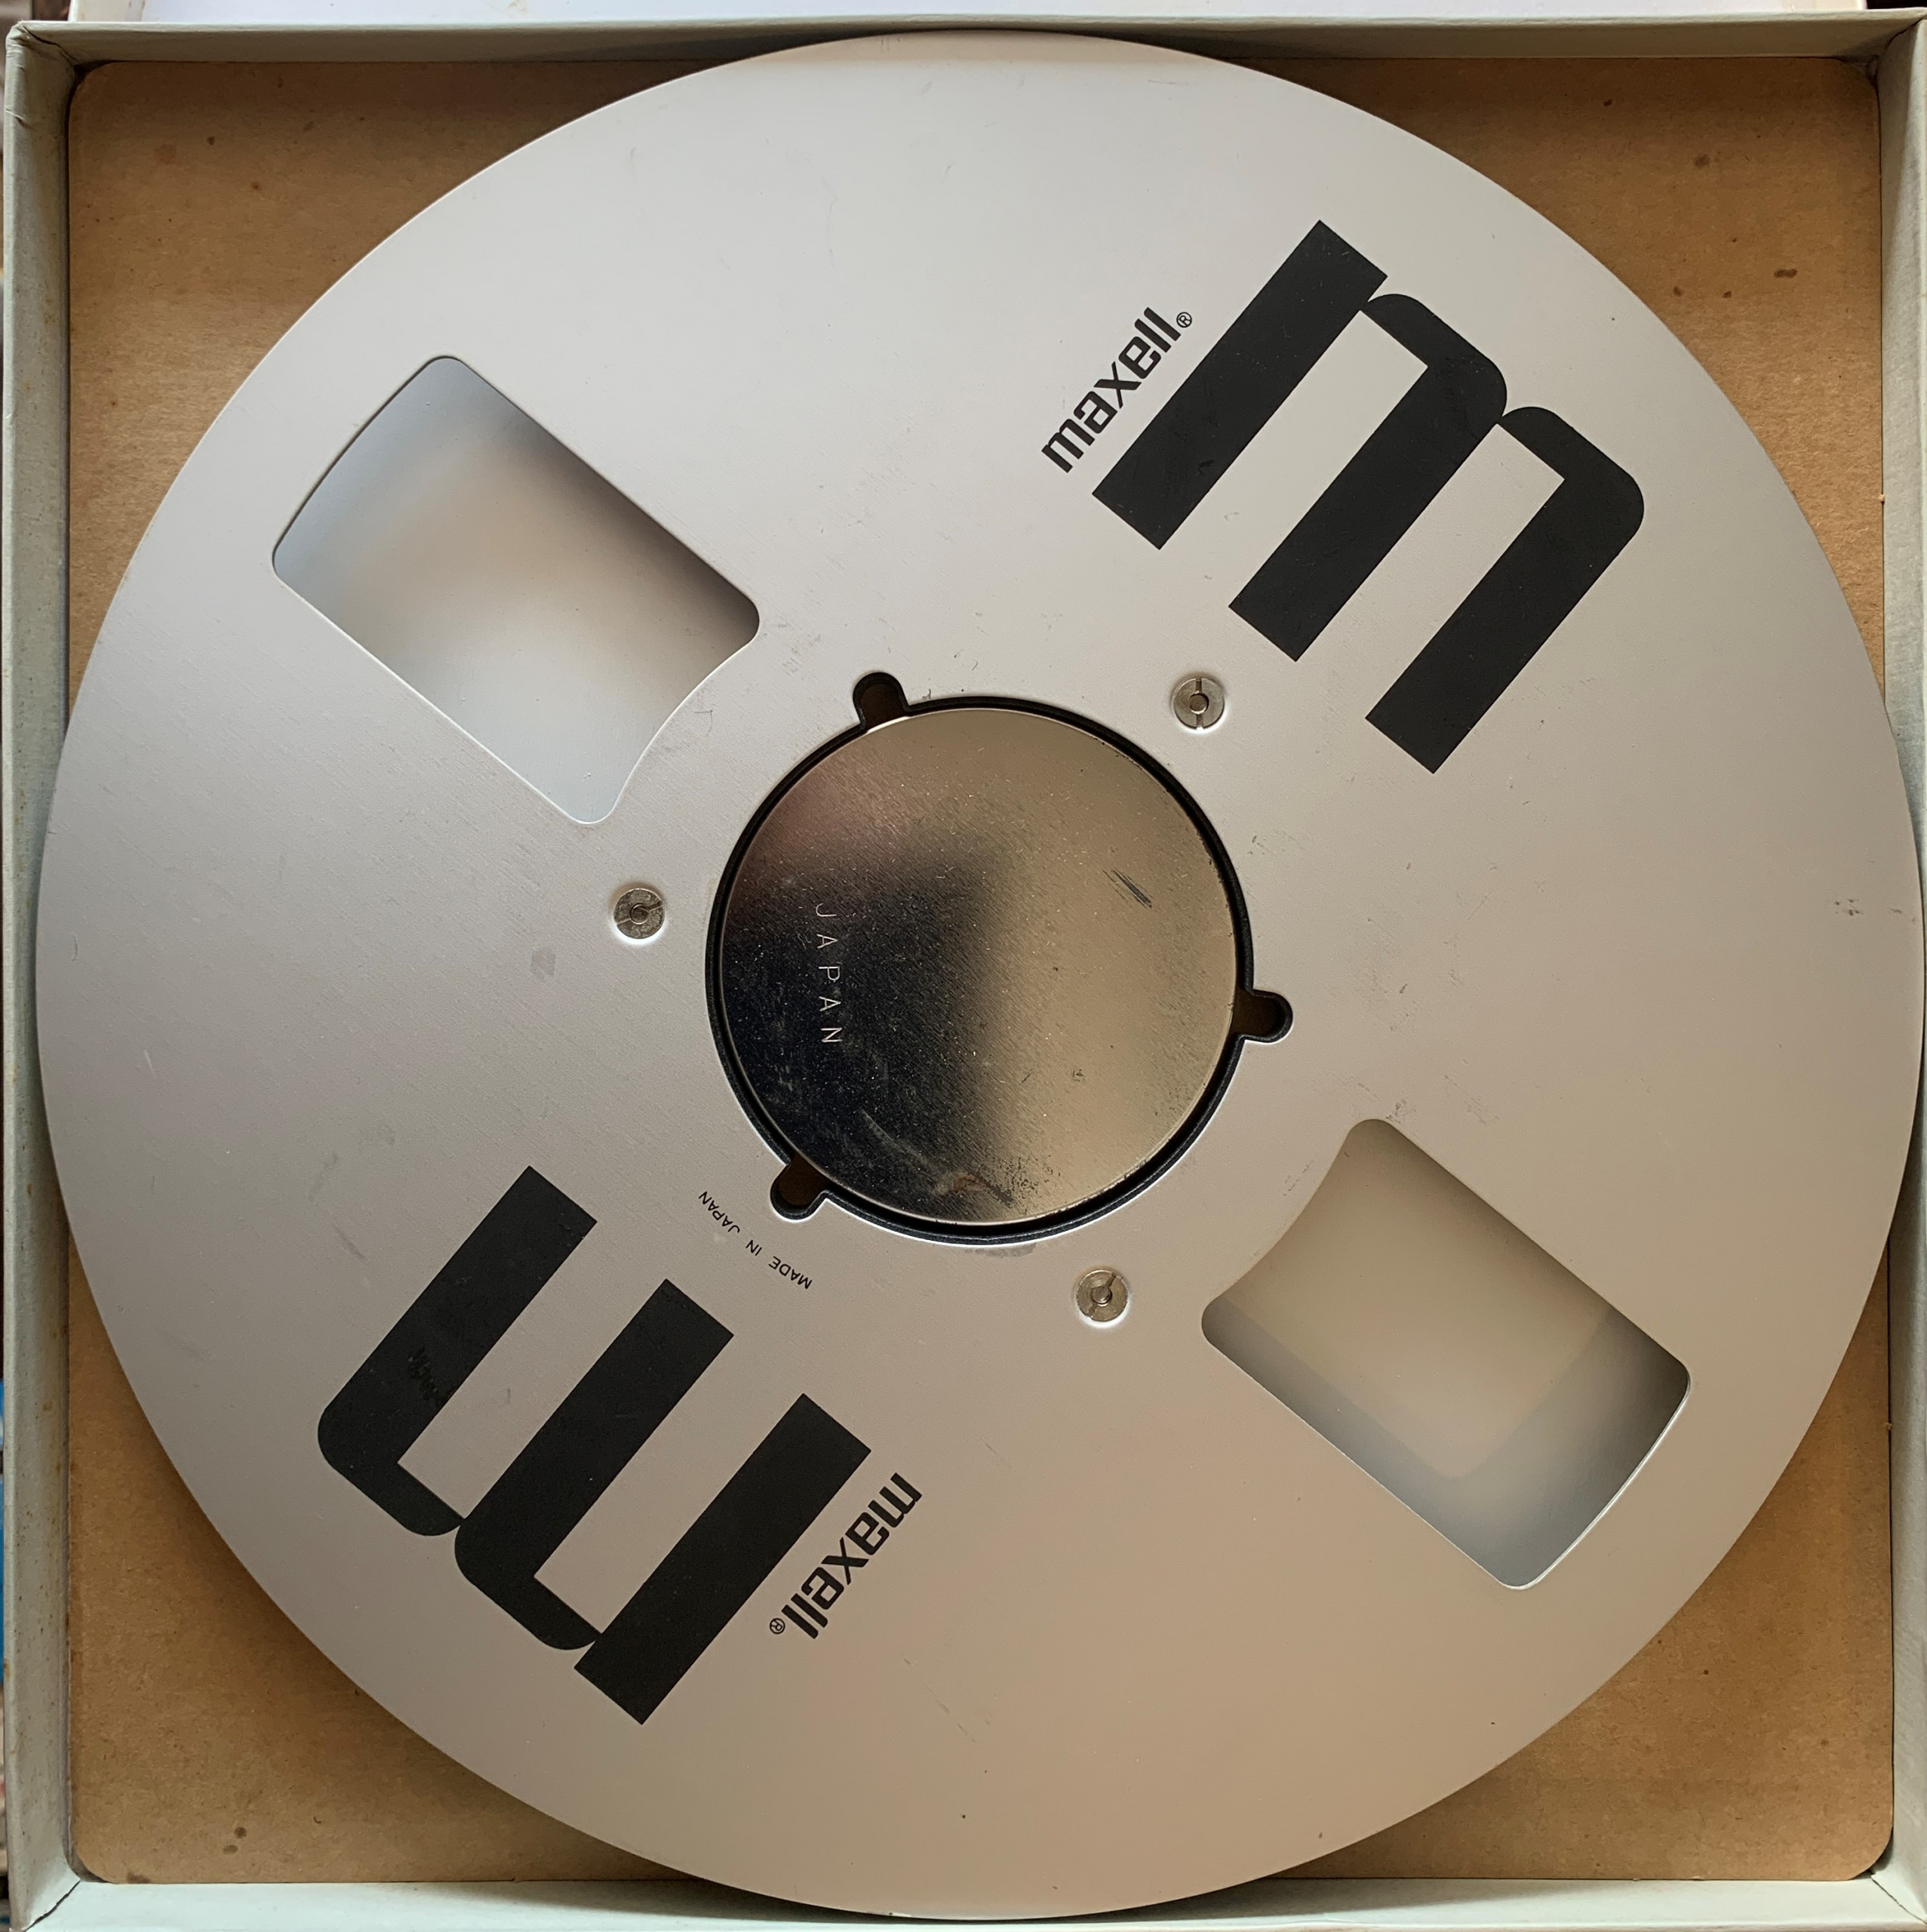 https://reeltoreelwarehouse.com/wp-content/uploads/2021/03/Maxell-MR10-10-in-Metal-Tape-Reel-scaled.jpg